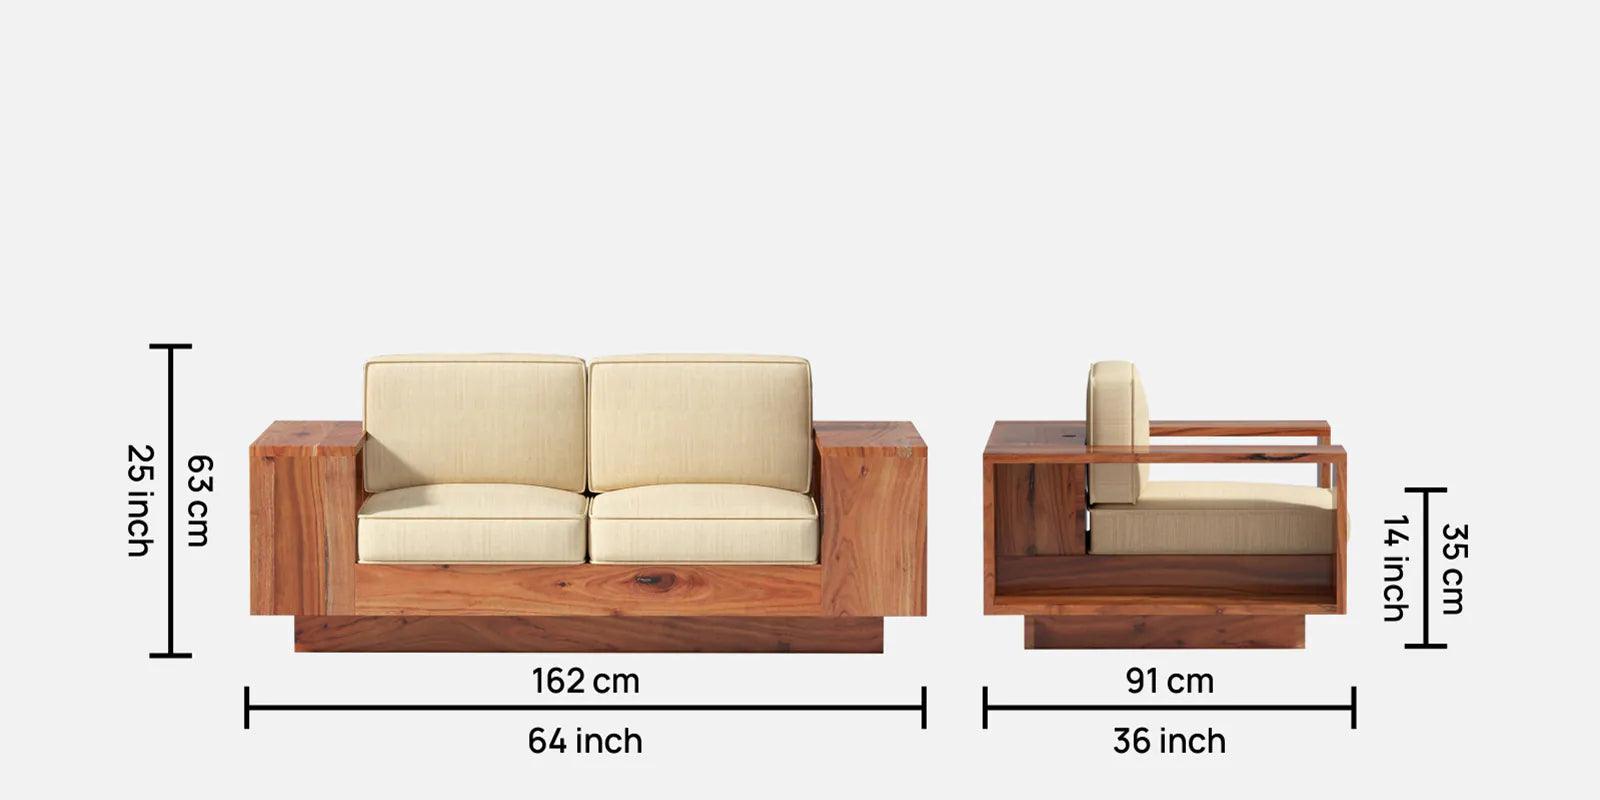 Solid Wood 2 Seater Sofa In Light Reddish Honey Finish